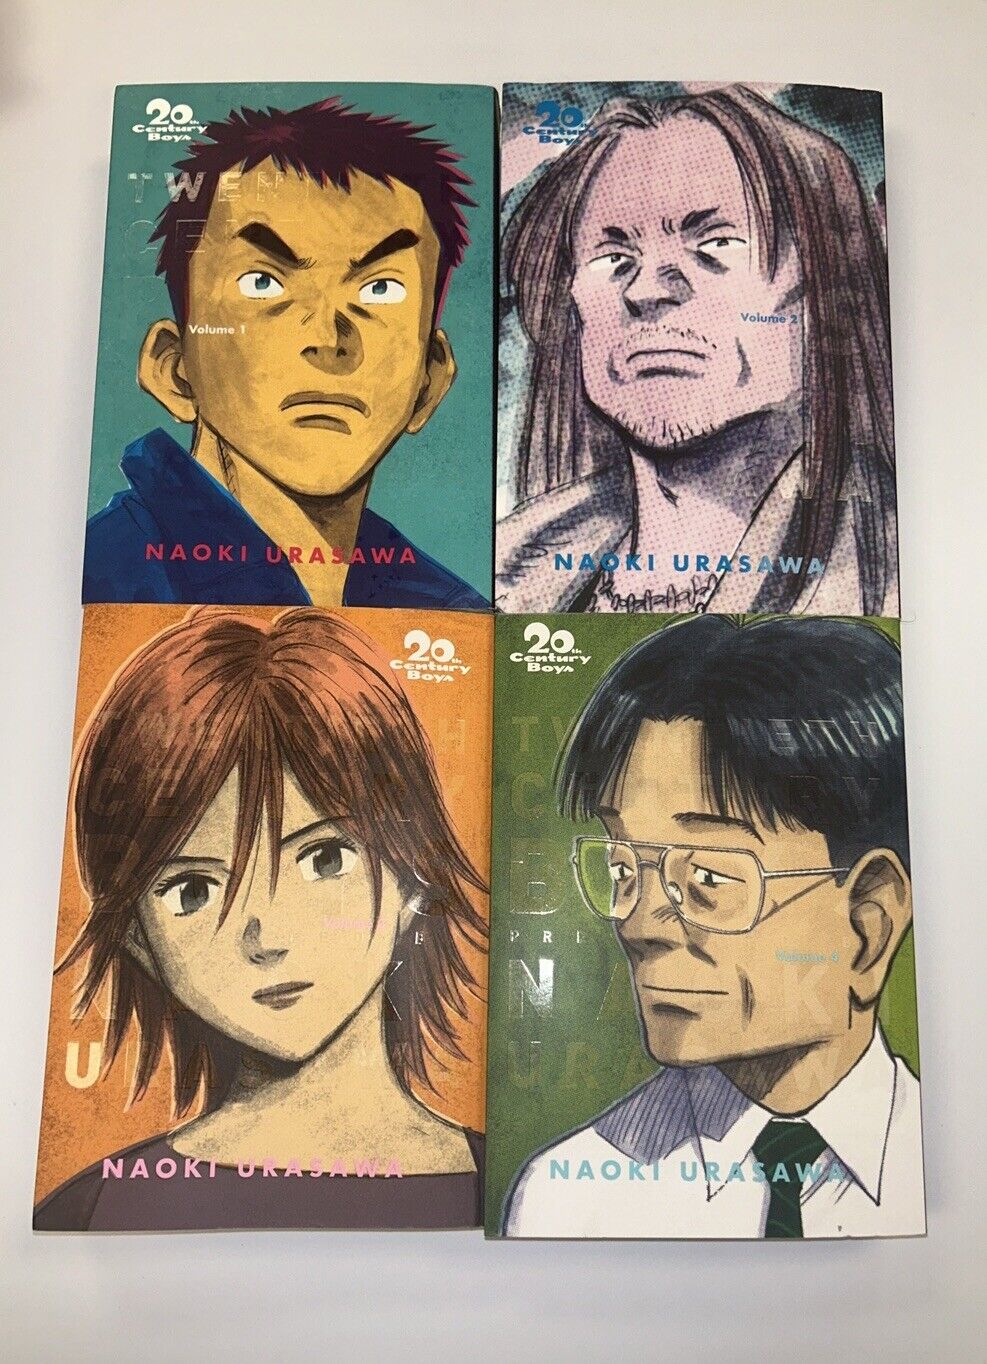 20th century boys manga vol 1-4